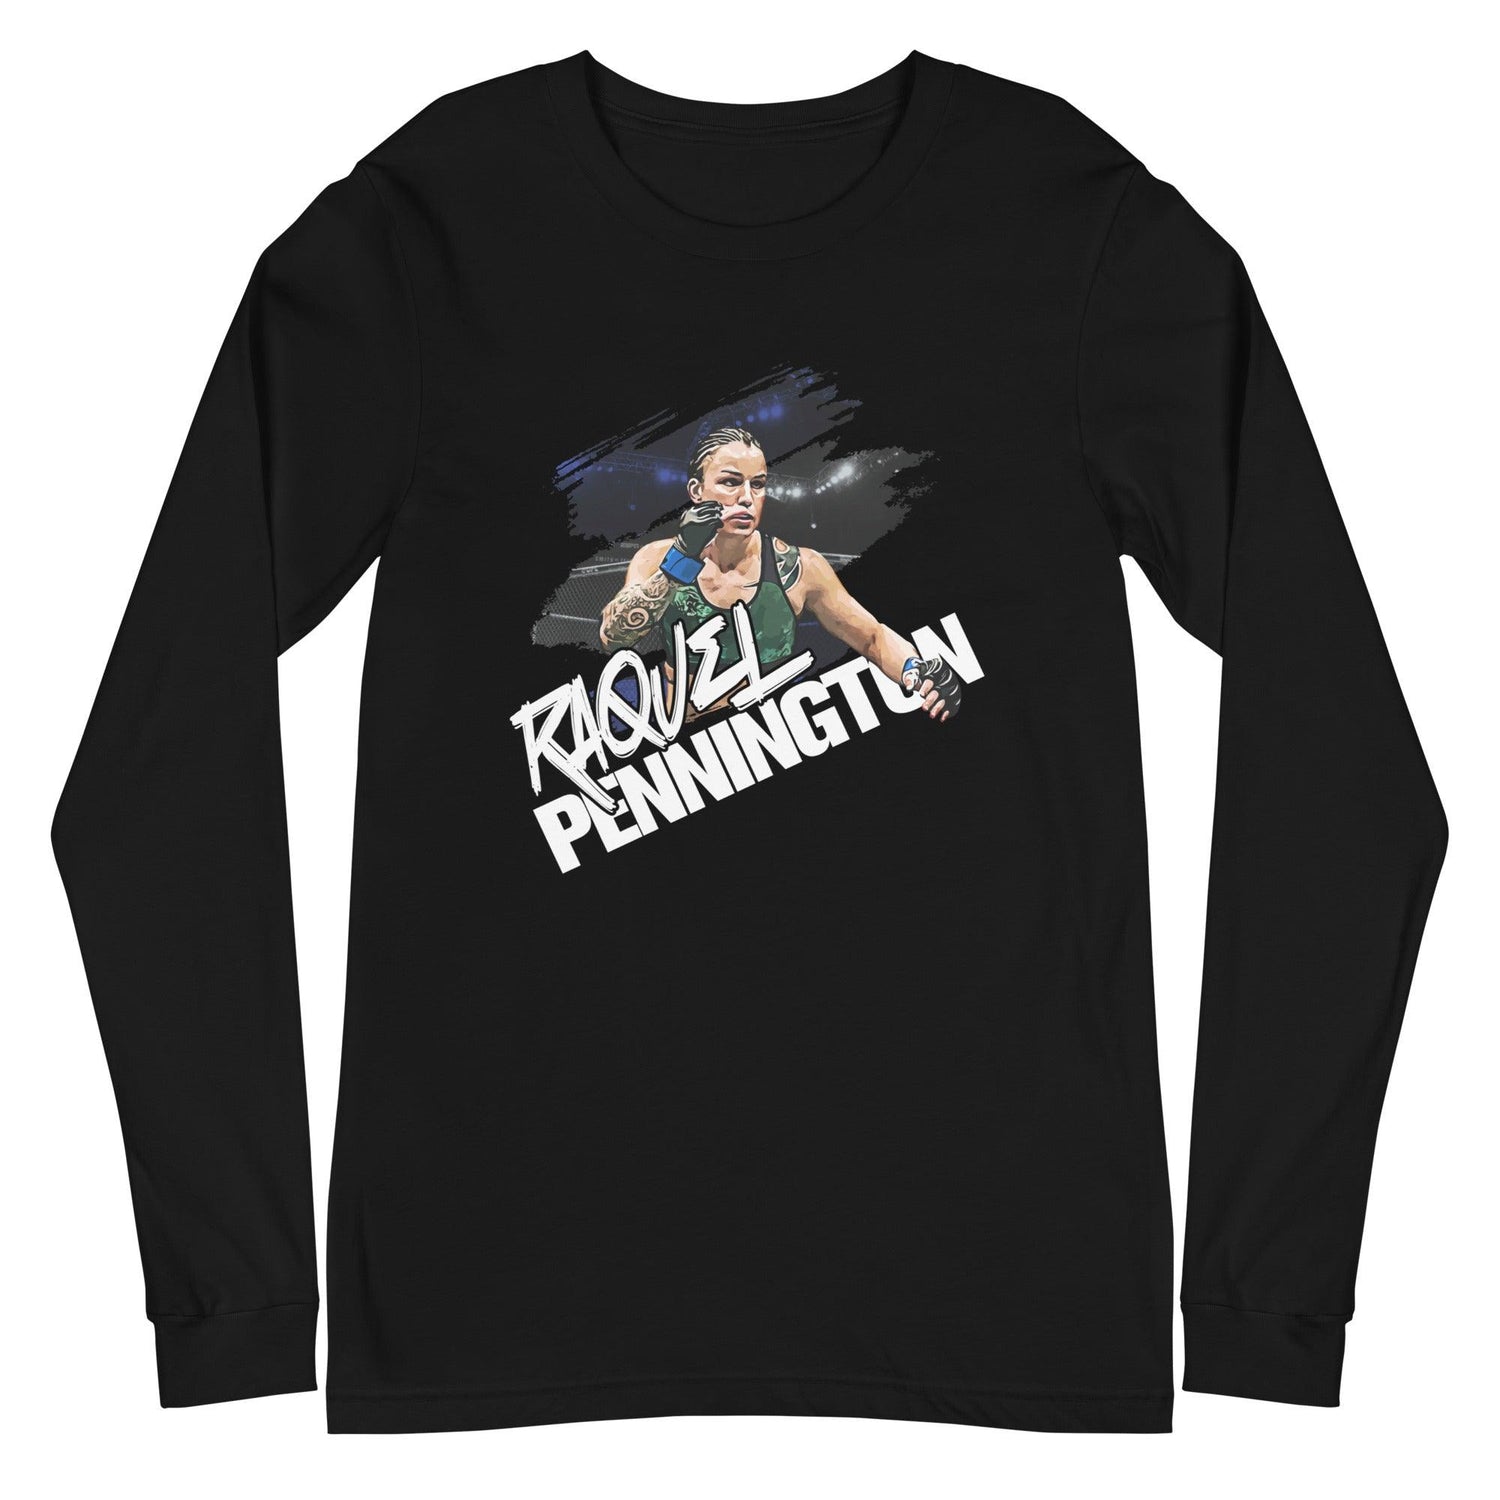 Raquel Pennington "Fight Night" Long Sleeve Tee - Fan Arch